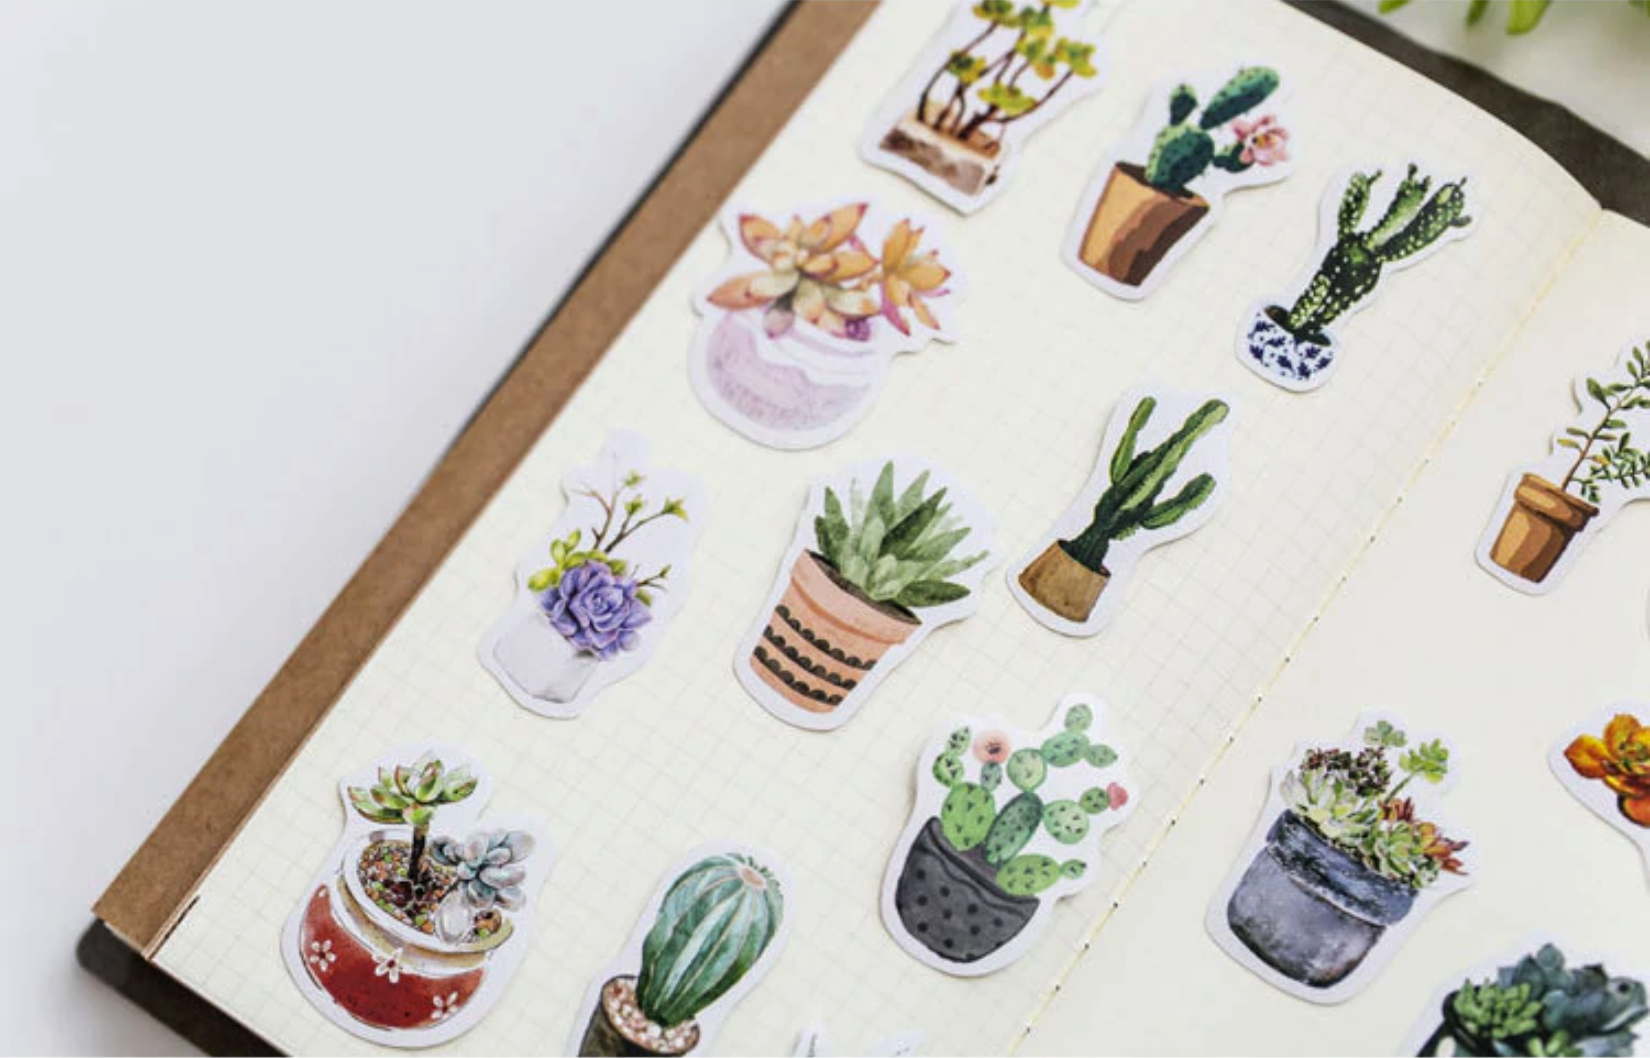 Watercolor Succulent Plant Stickers 6-Pack - Kawaii Pen Shop - Cutsy World